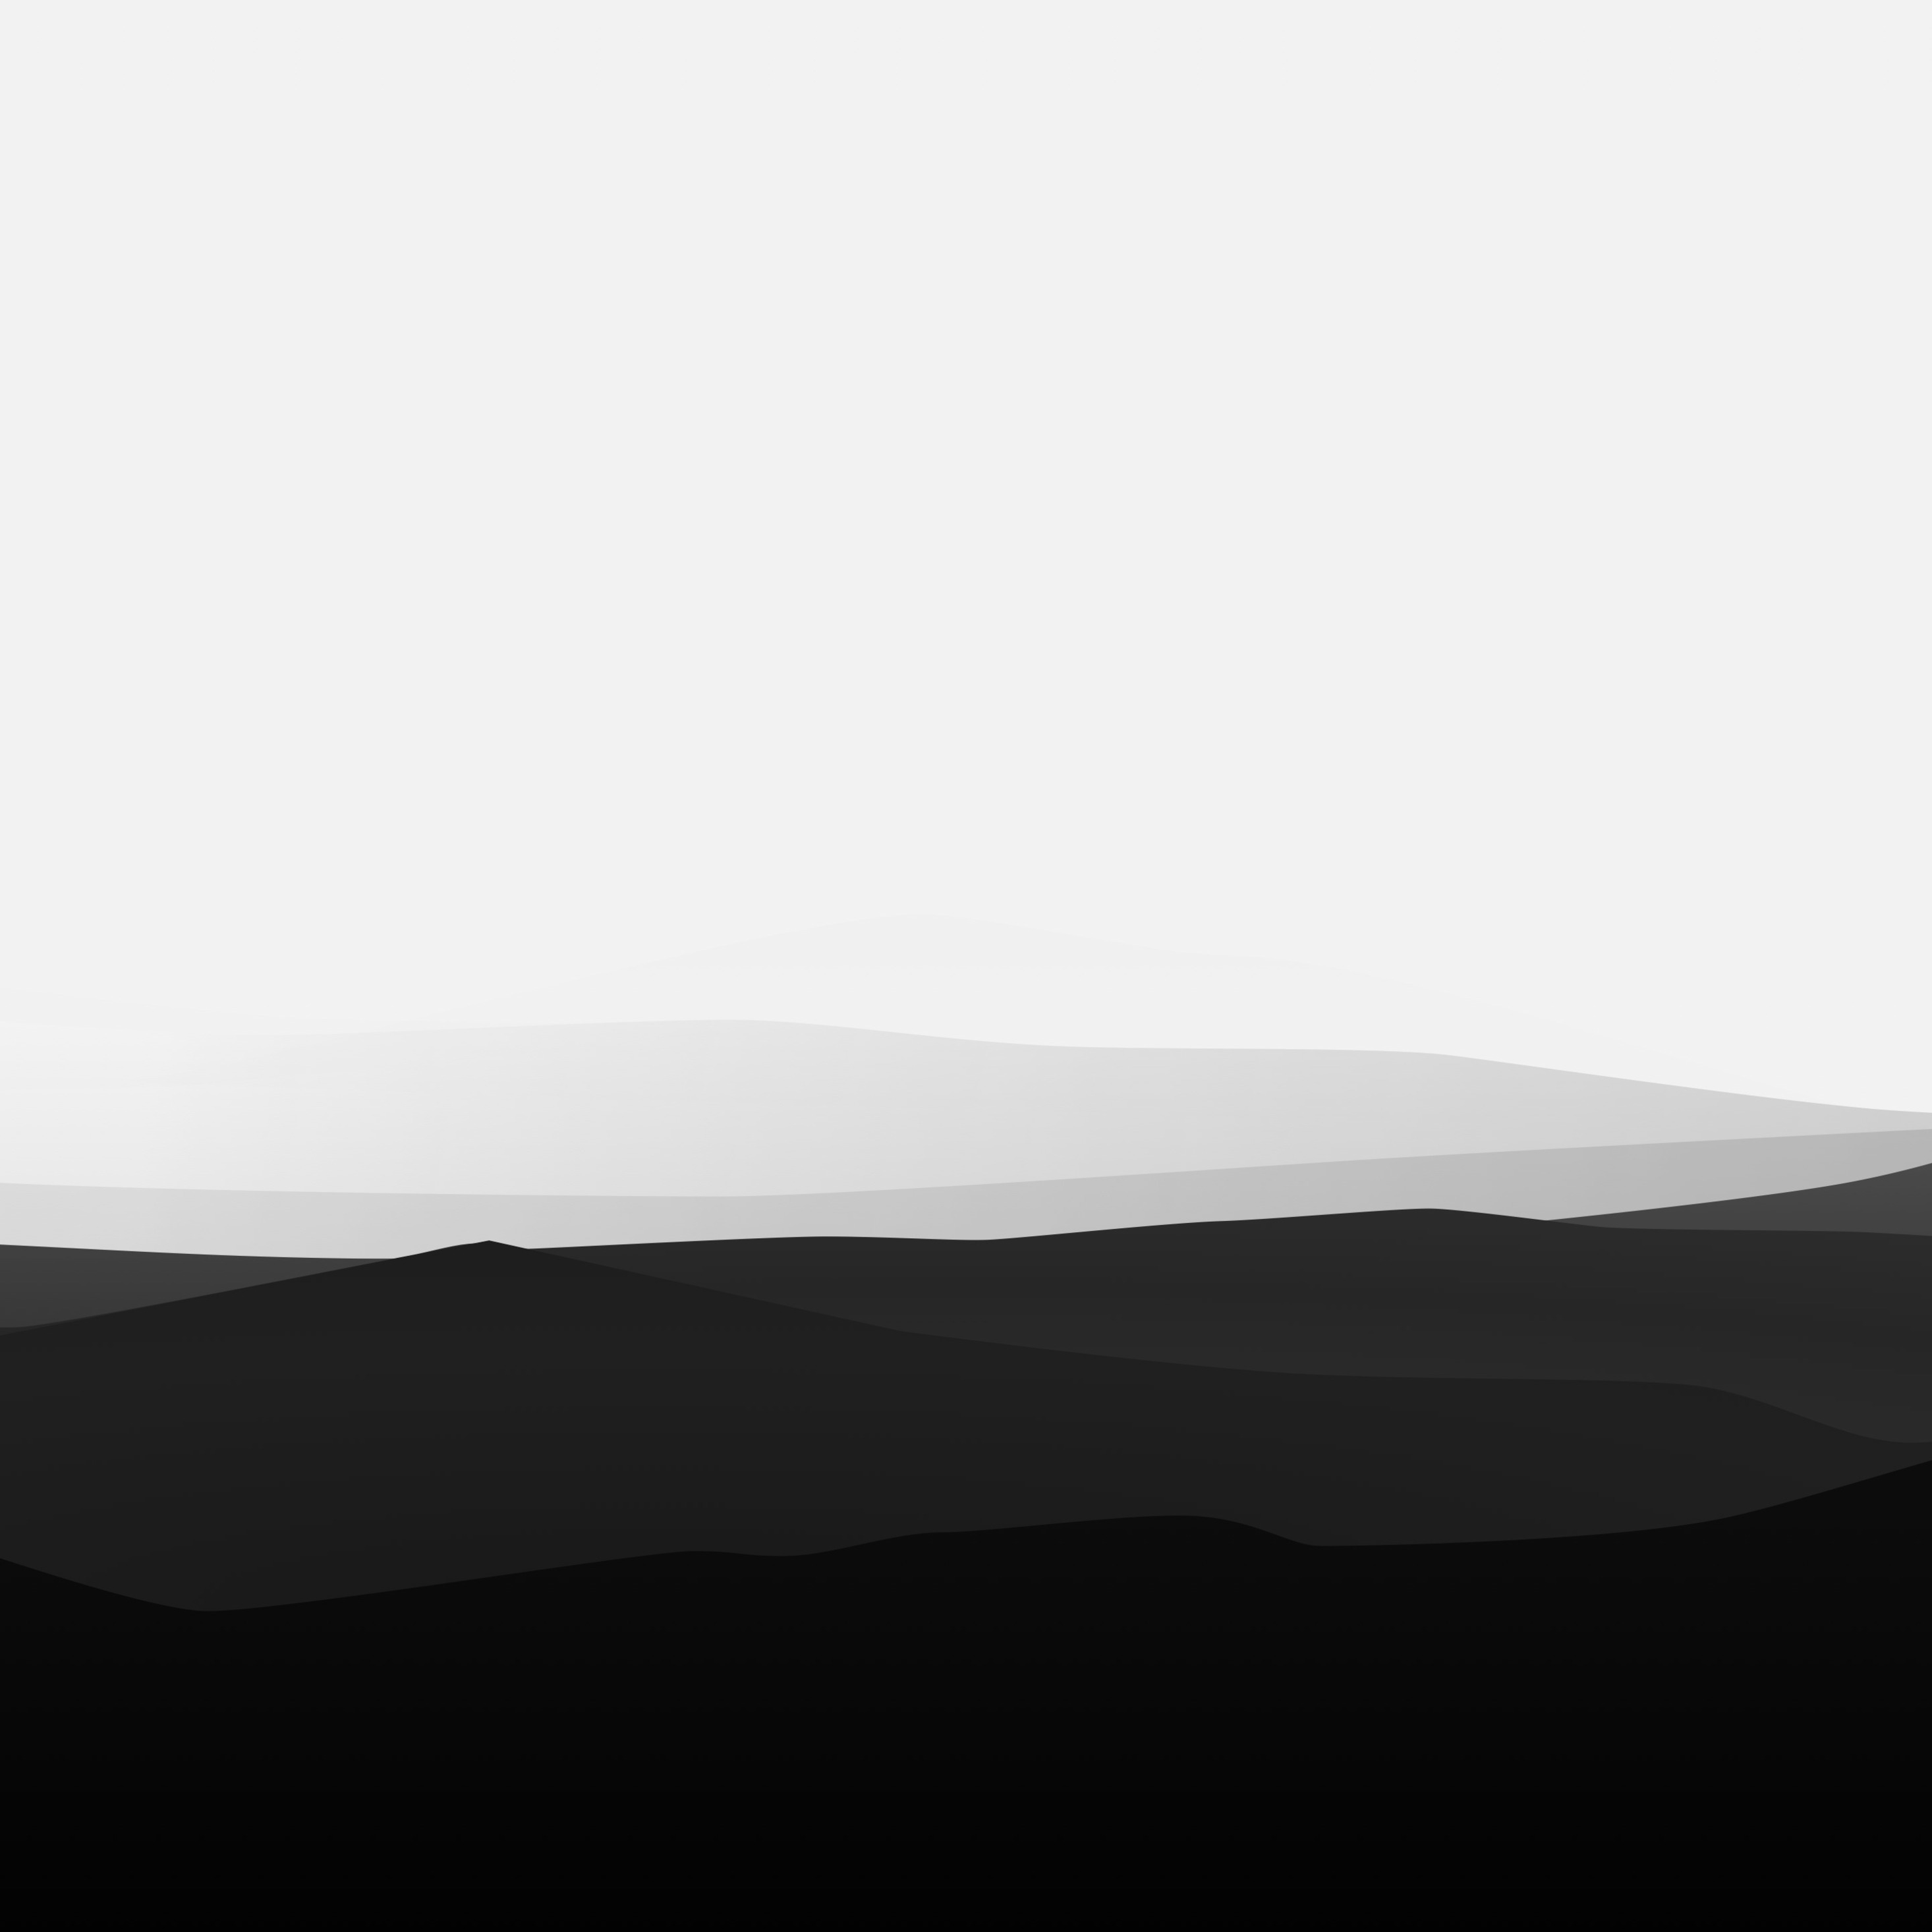 fond d'écran ipad blanc,noir,blanc,ciel,horizon,colline